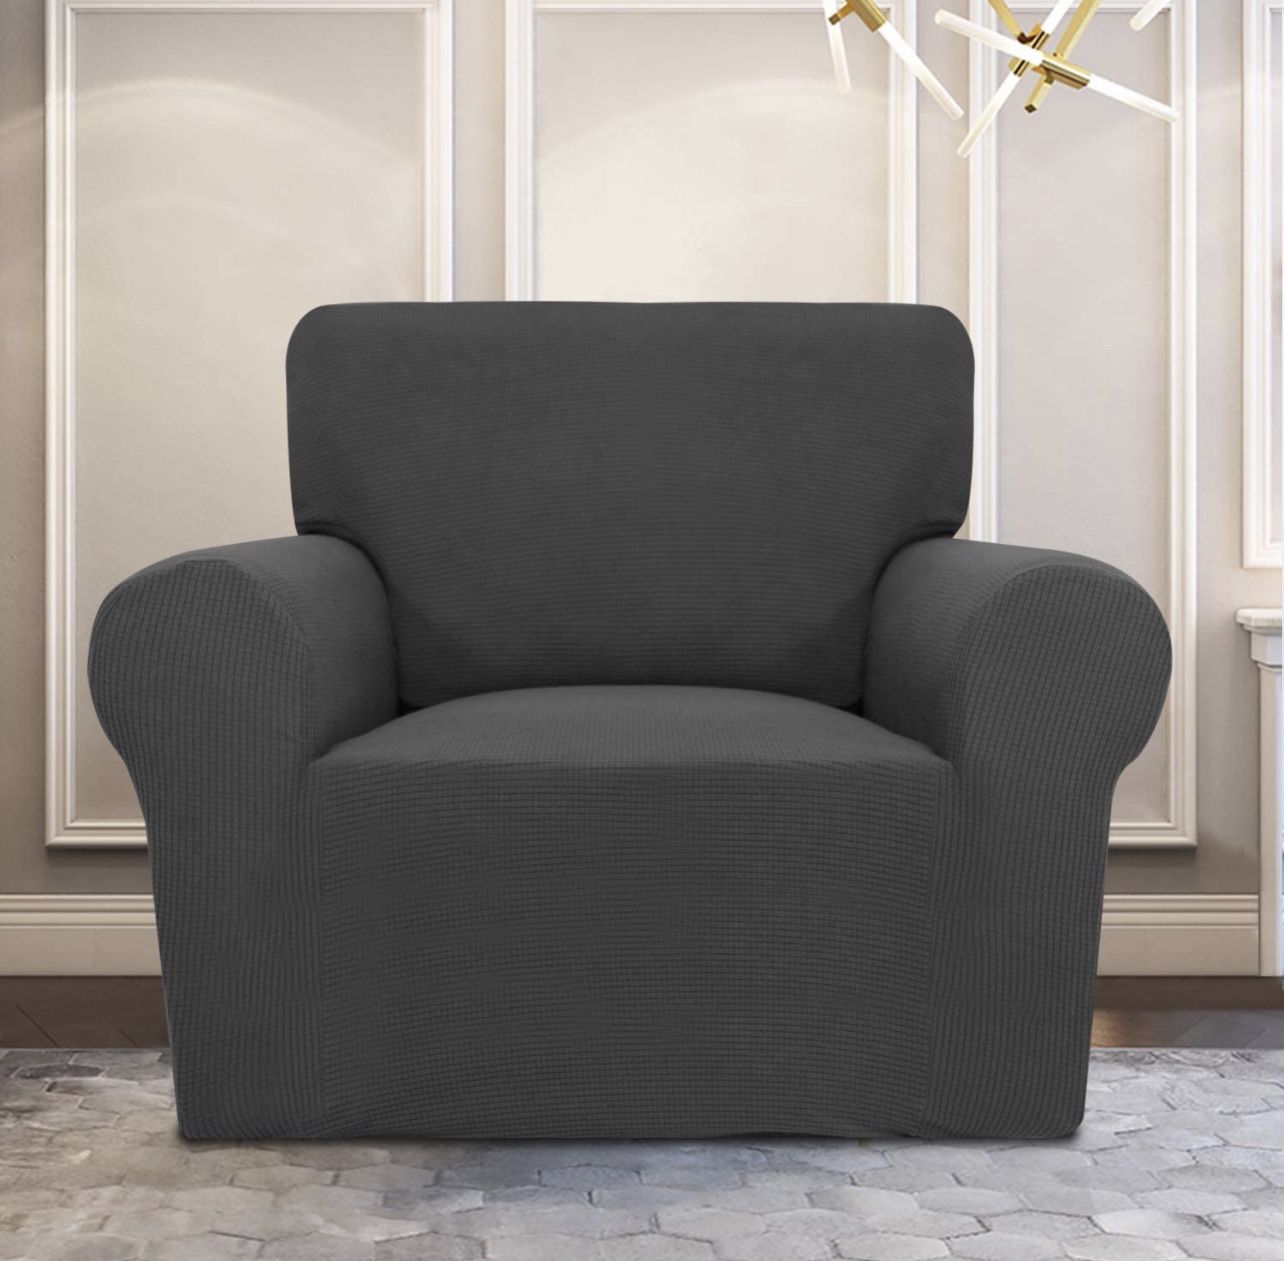 New Chair Sofa Slipcover Stretchy - Dark Gray  